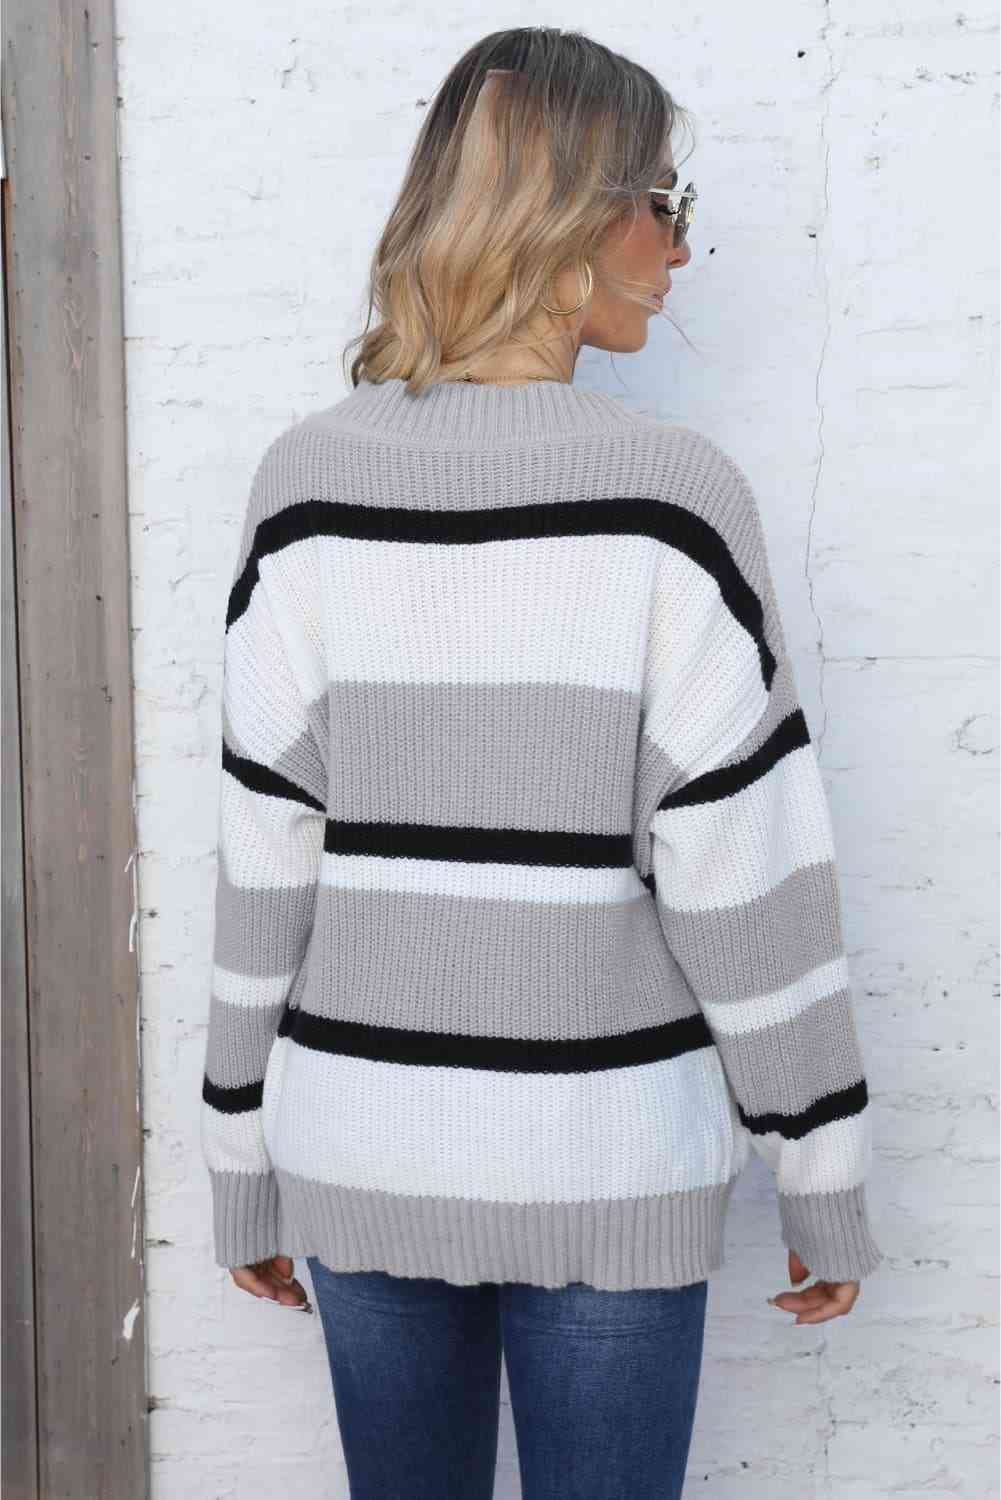 Color Block V-Neck Dropped Shoulder Sweater (7 Colors) Shirts & Tops Krazy Heart Designs Boutique   